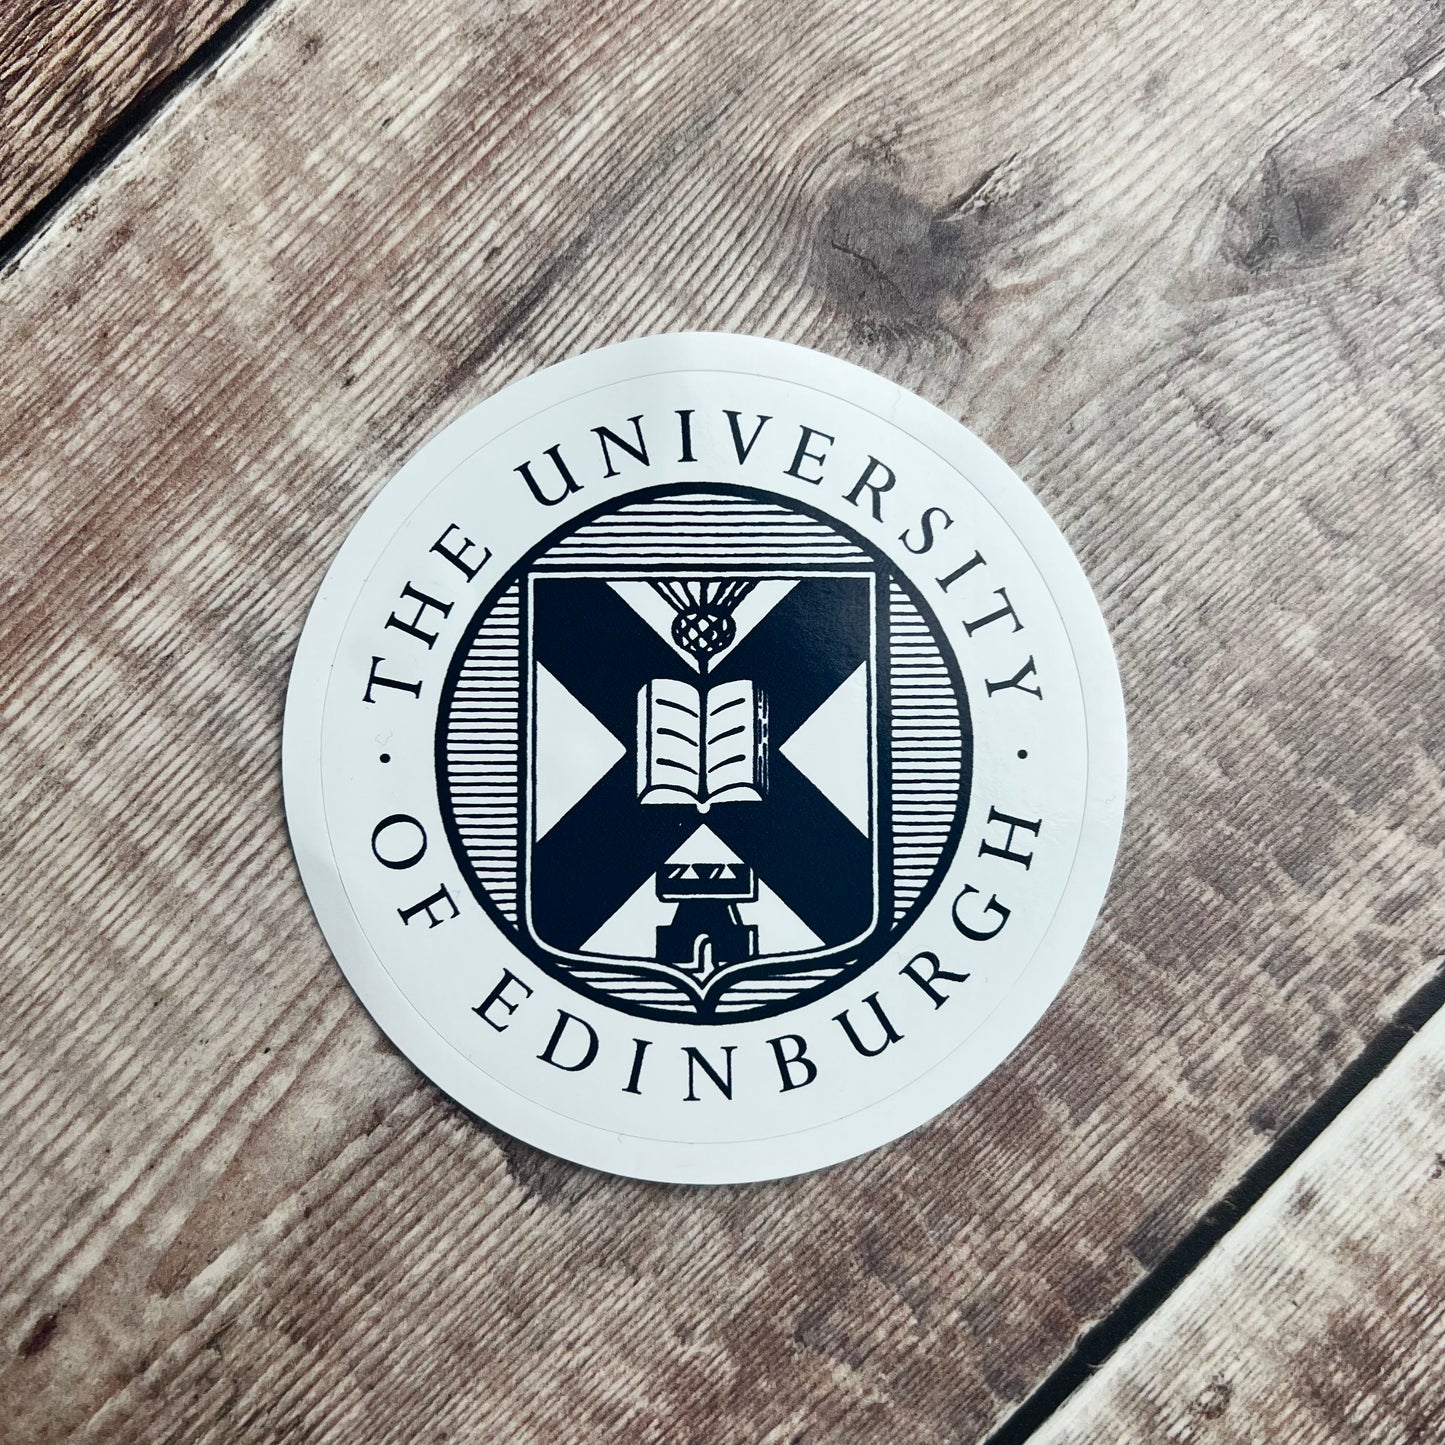 Laptop sticker with navy university crest on white background